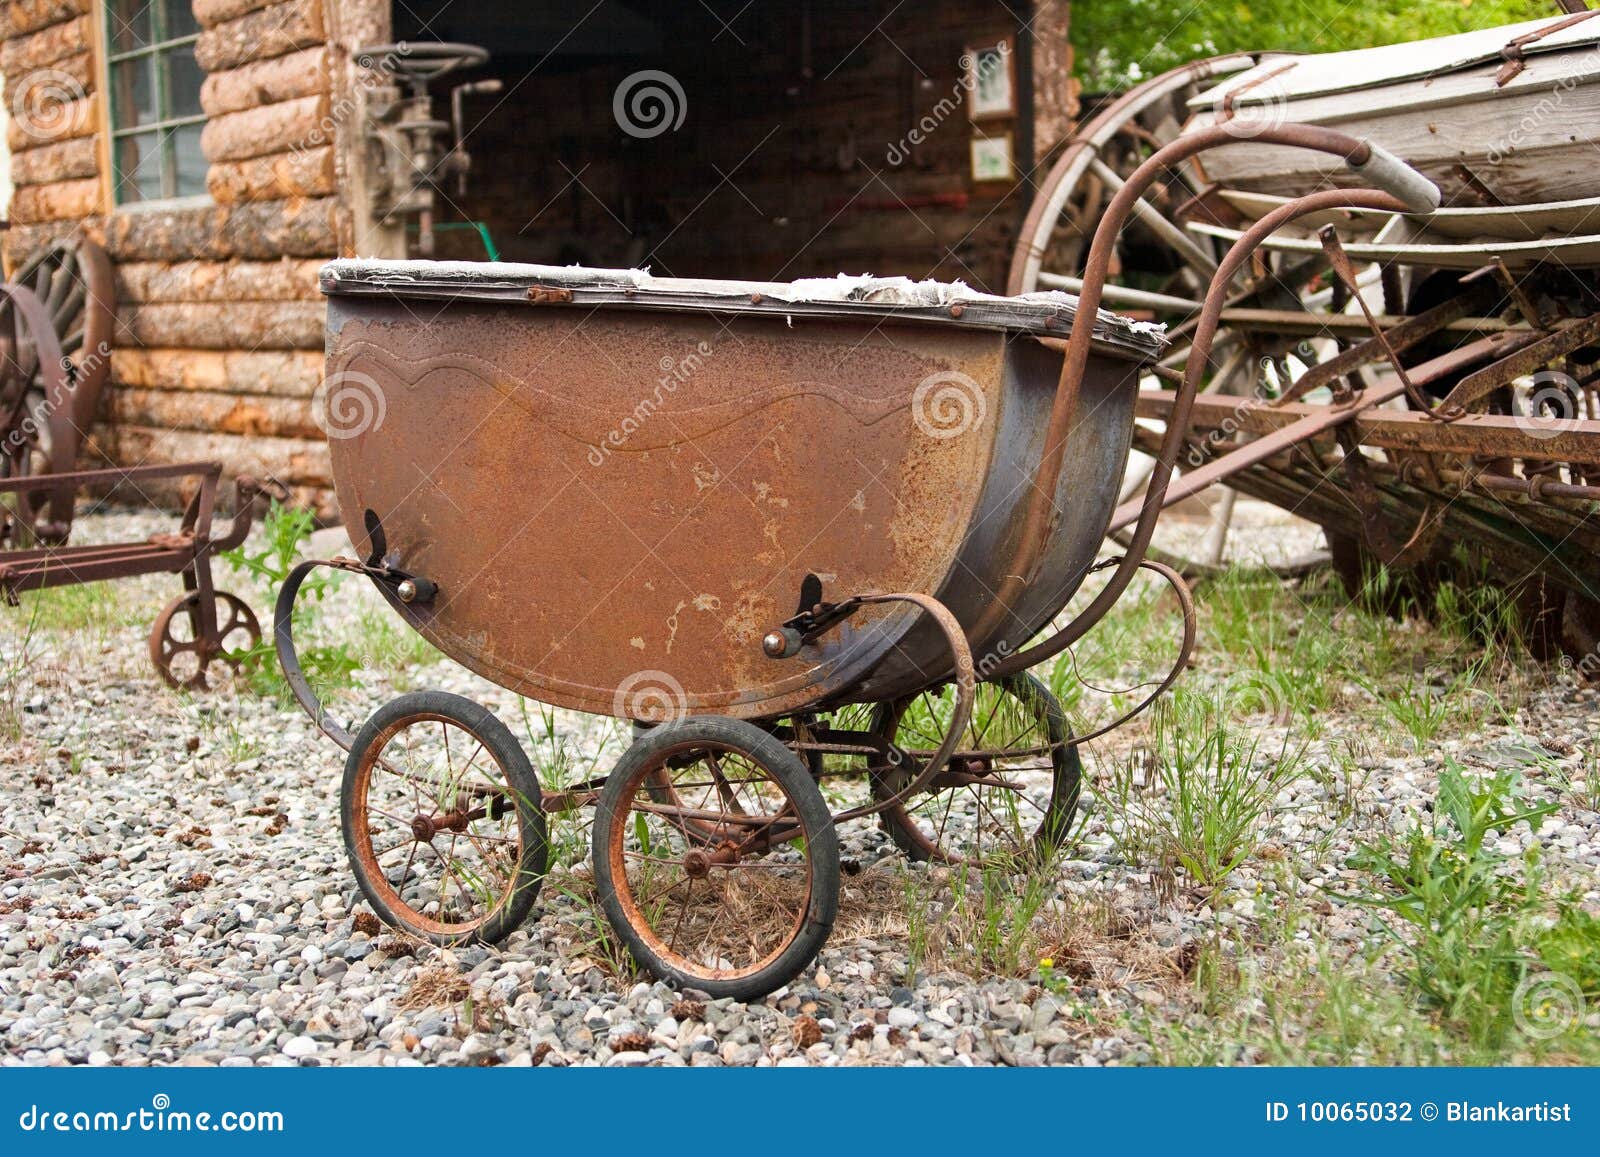 antique baby stroller metal